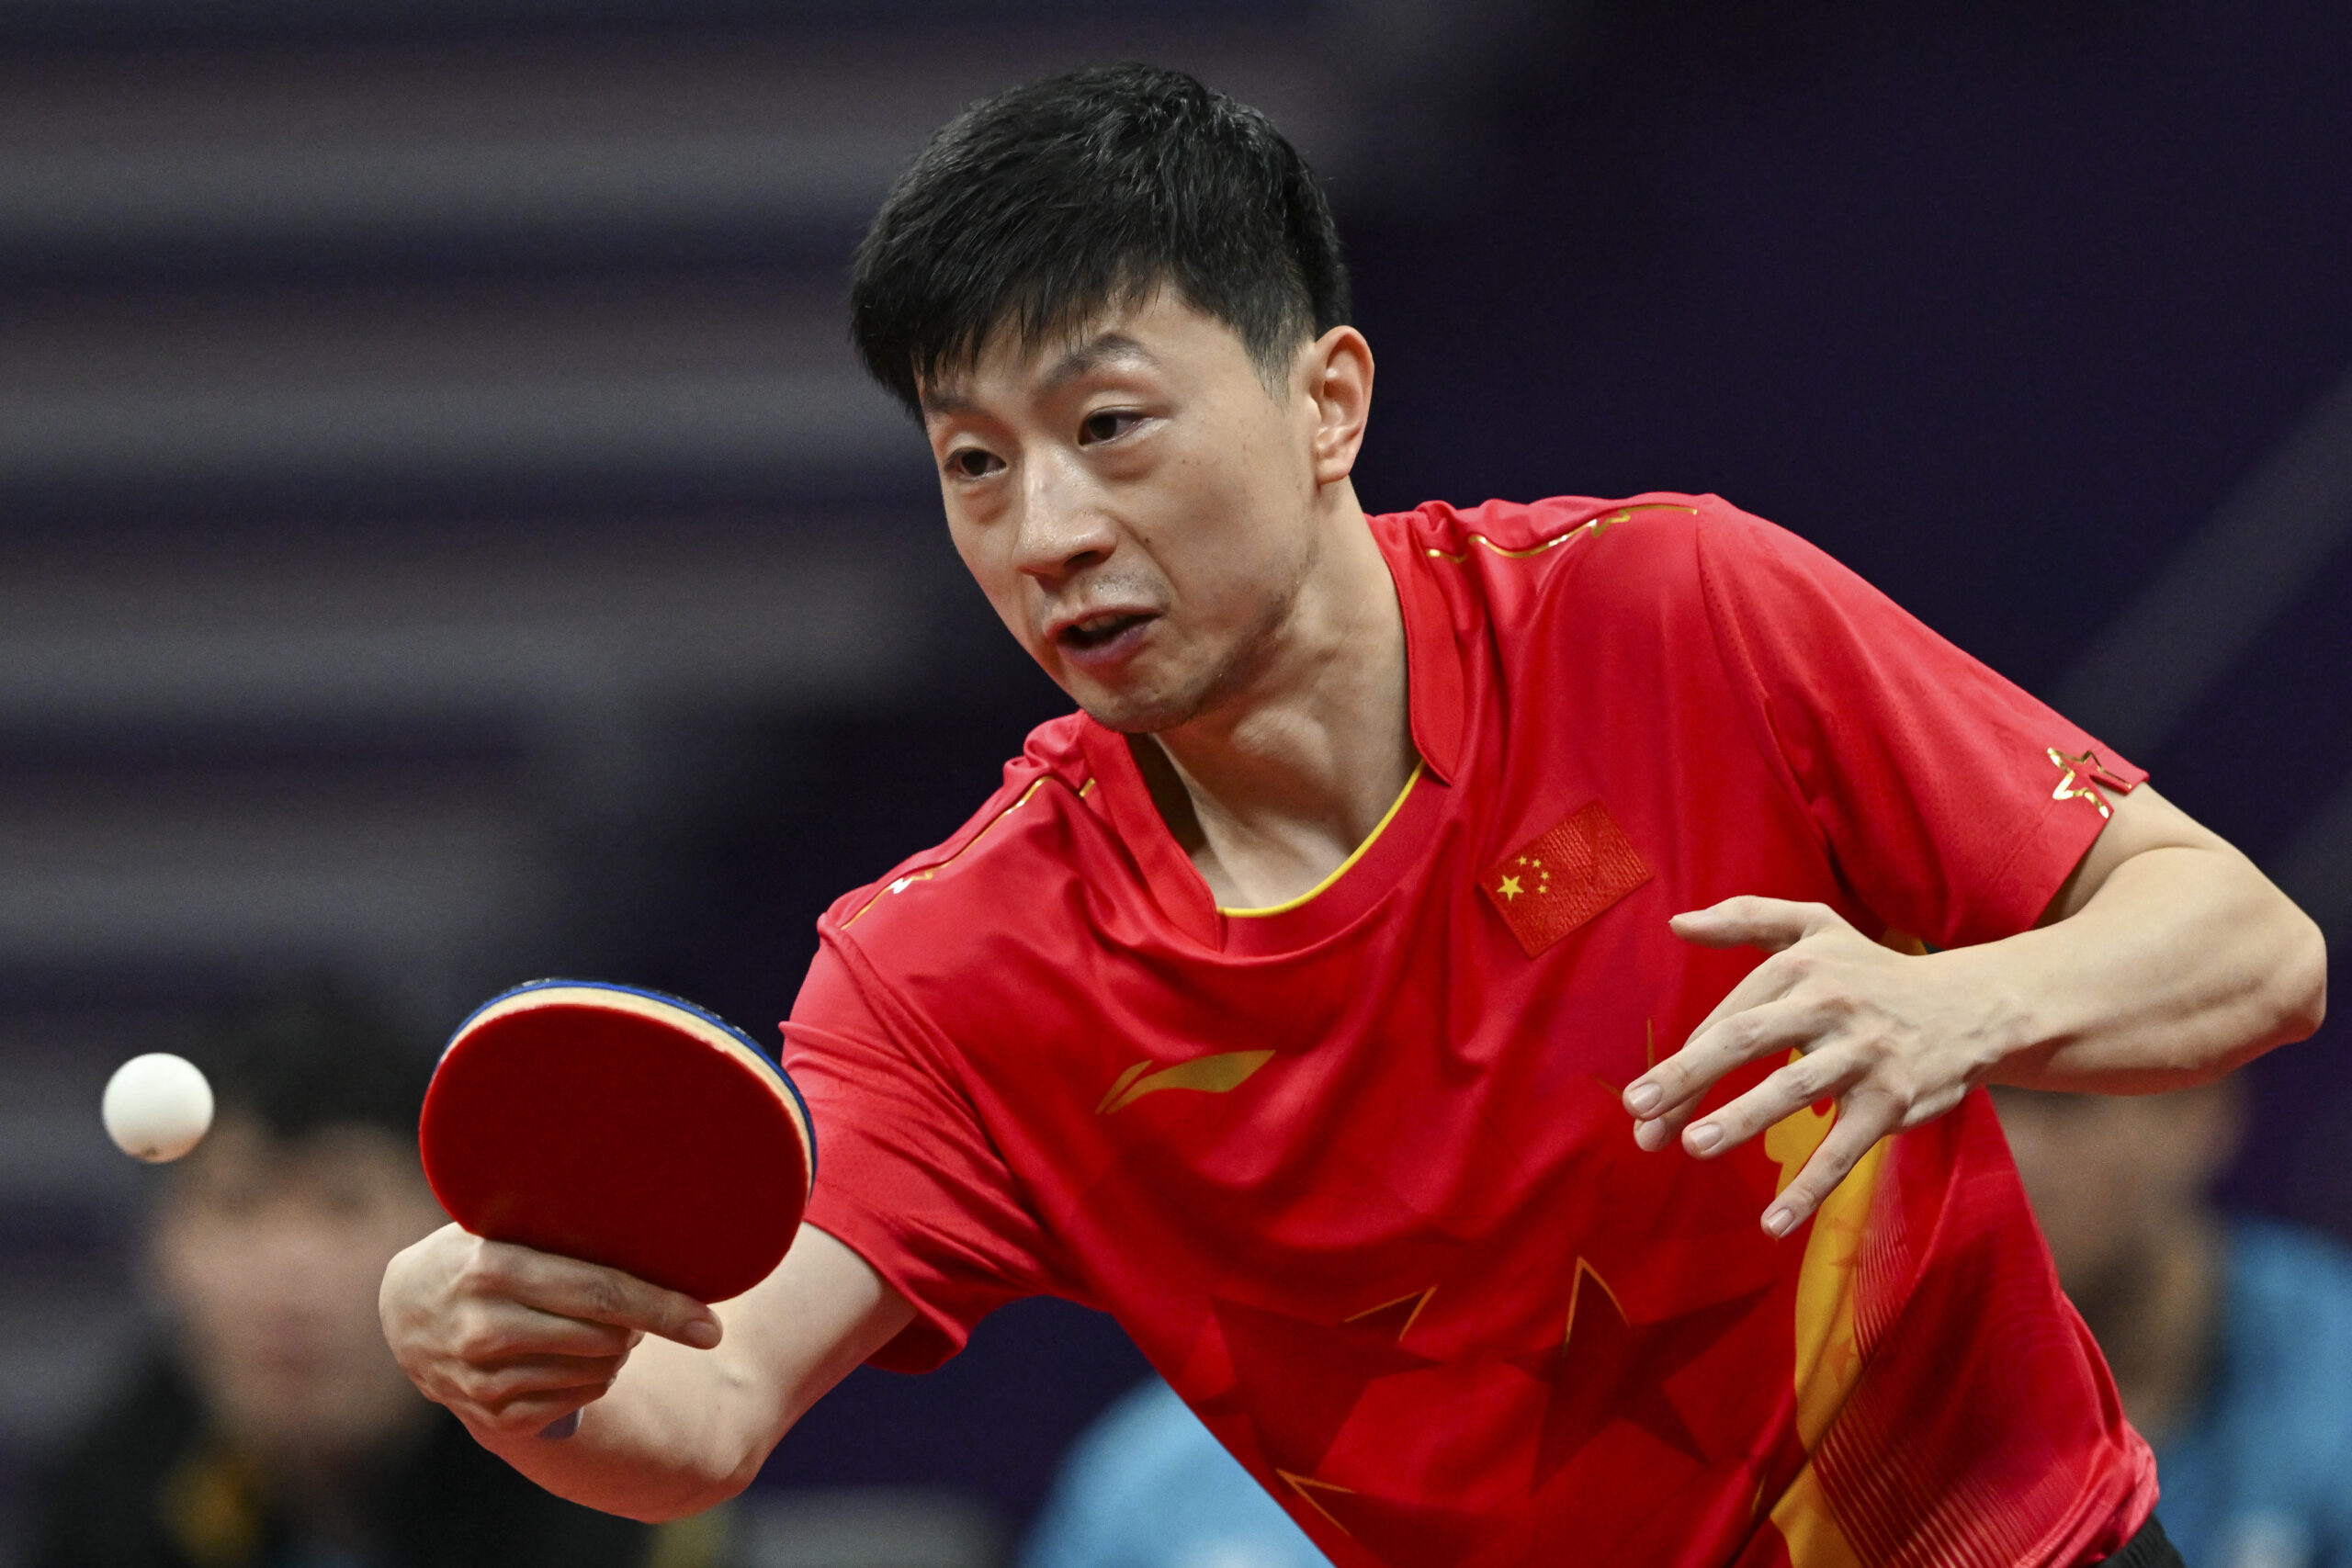 China's Ma Long hits a return against South Korea's Park Ganghyeon in their men's team final table tennis match during the Hangzhou 2022 Asian Games 